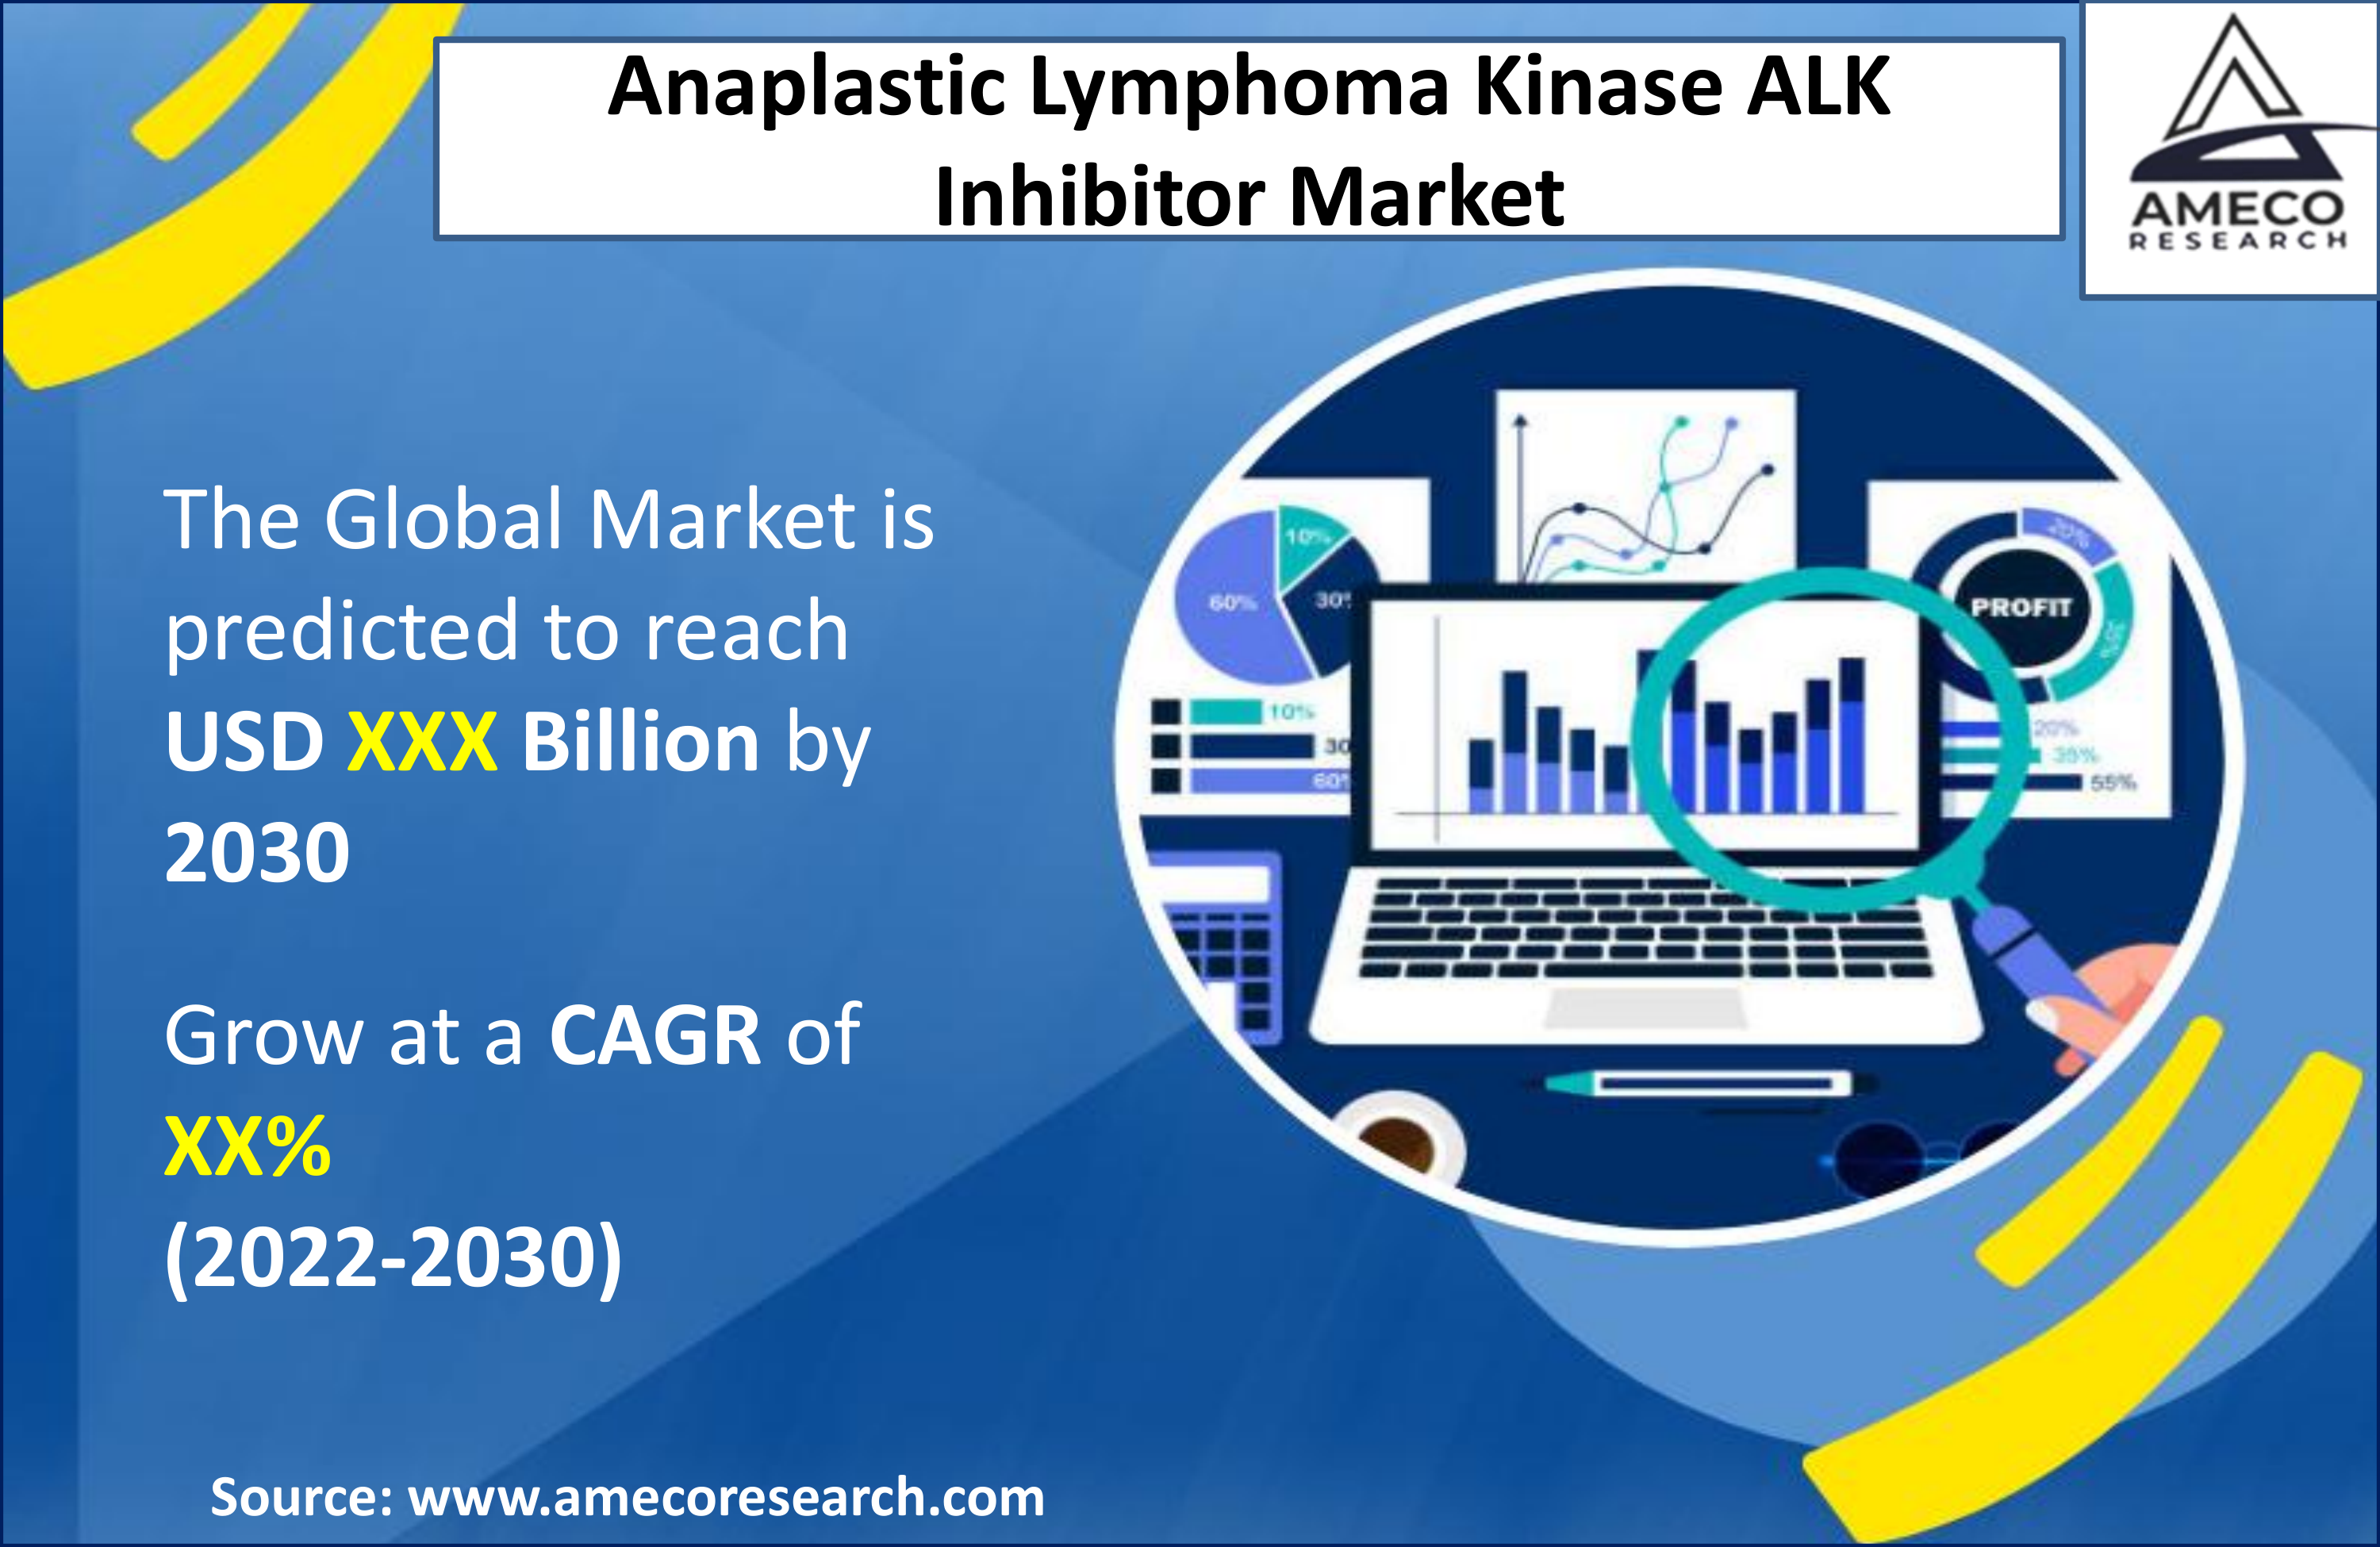 Anaplastic Lymphoma Kinase ALK Inhibitor Market